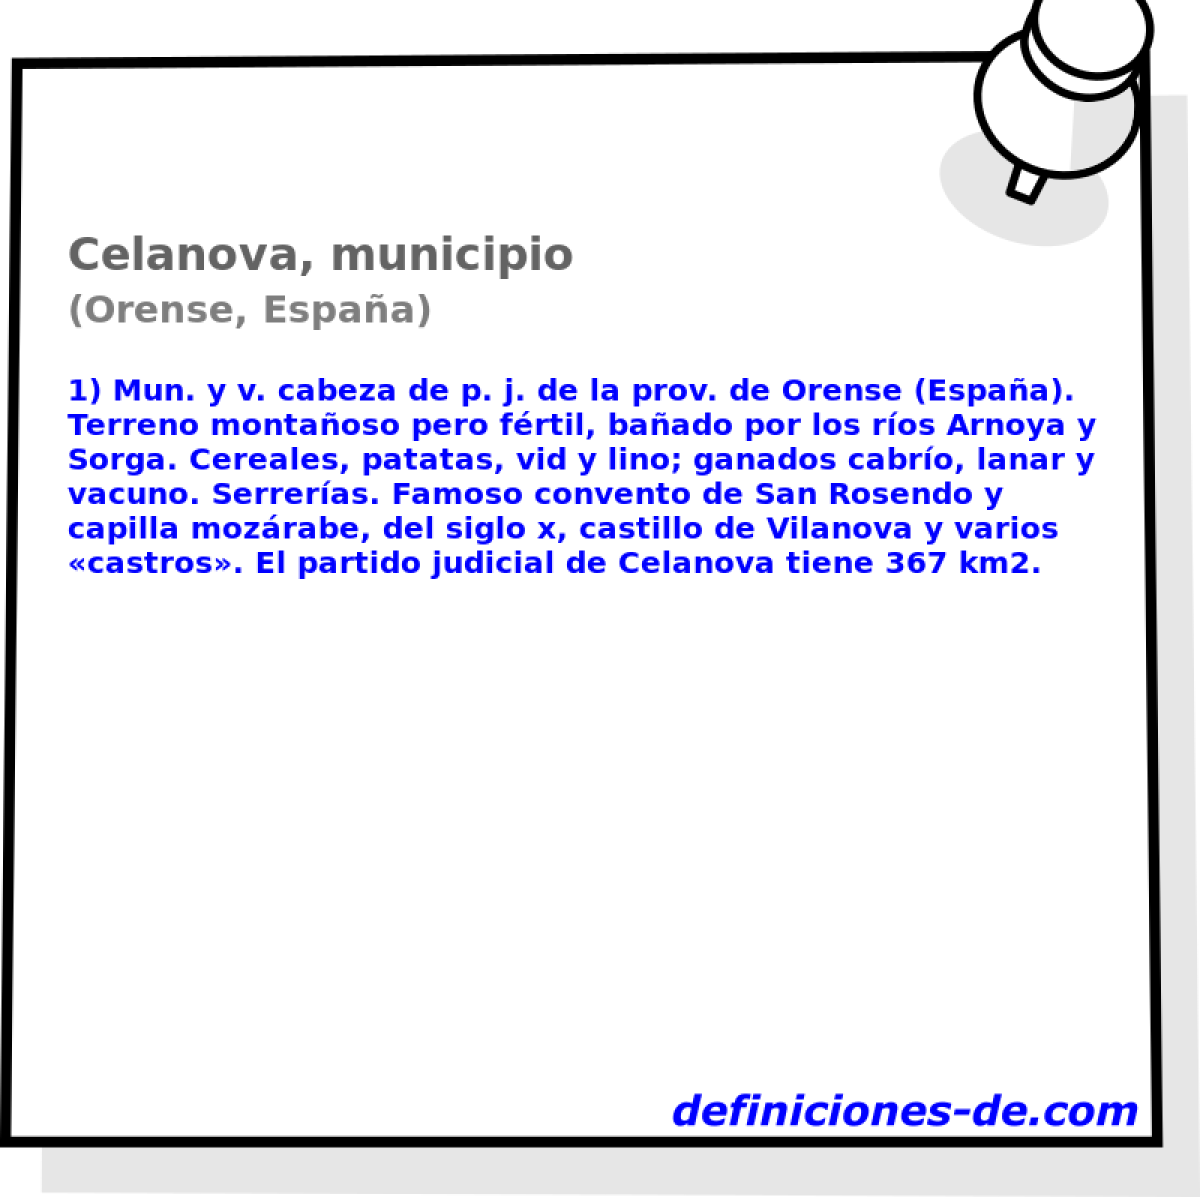 Celanova, municipio (Orense, Espaa)